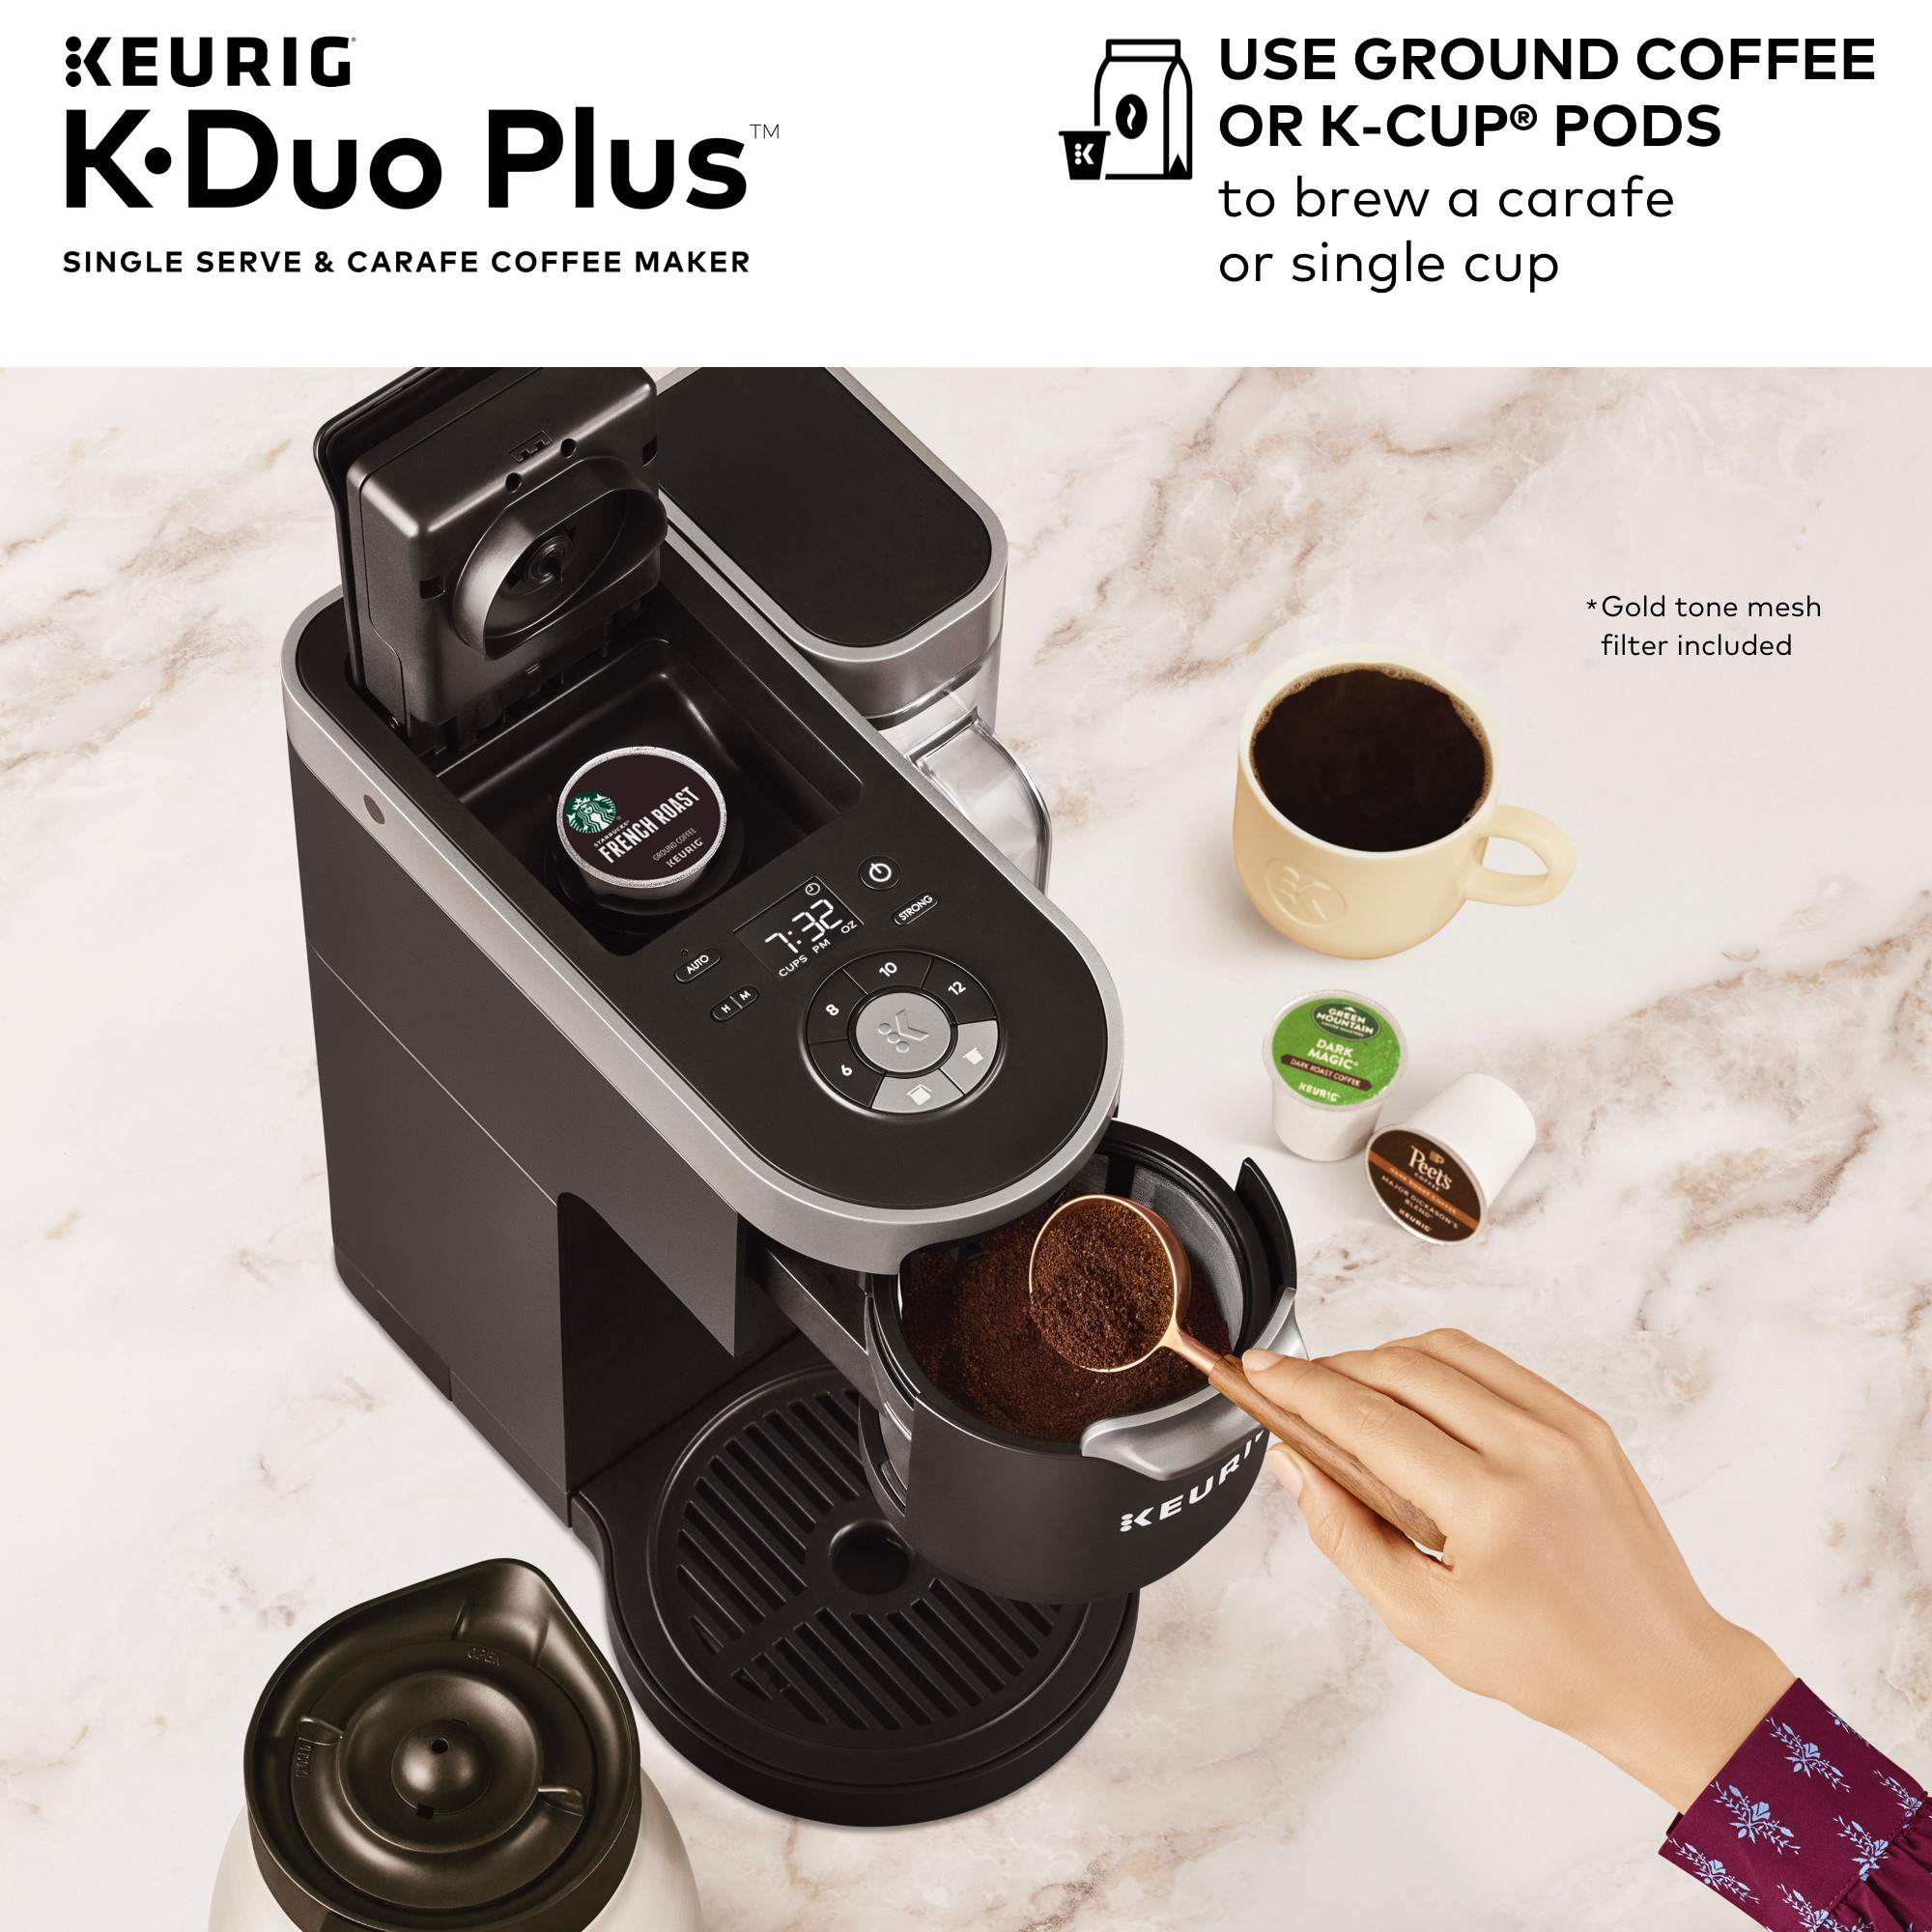 Keurig K-Duo Plus Single Serve & Carafe Coffee Maker - image 19 of 25